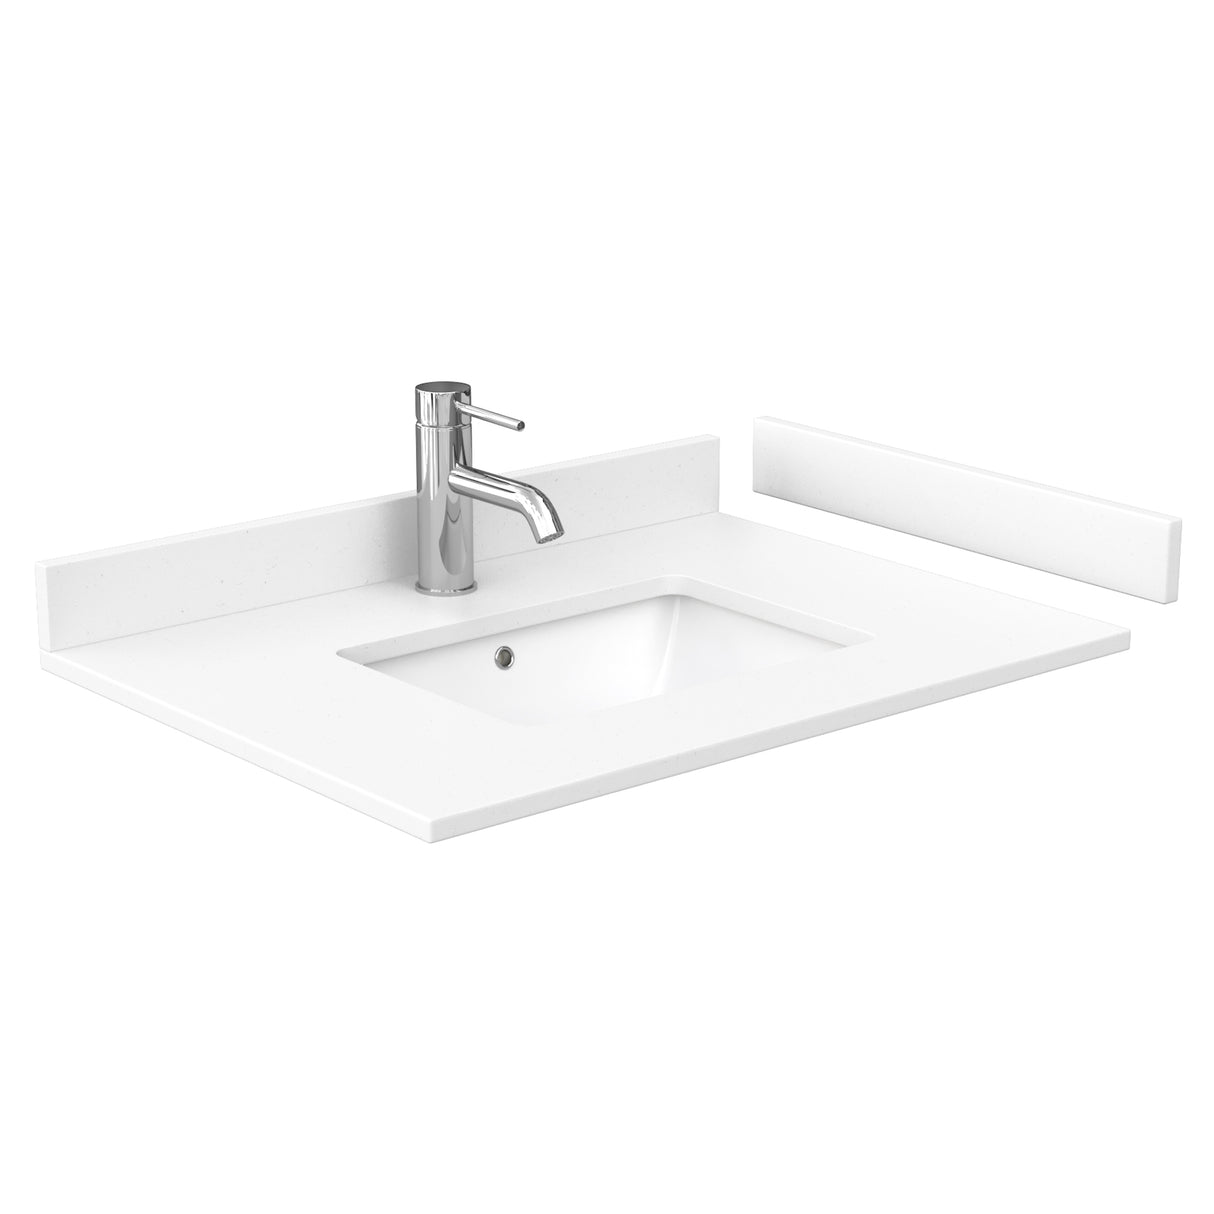 Deborah 30 Inch Single Bathroom Vanity in White White Cultured Marble Countertop Undermount Square Sink No Mirror